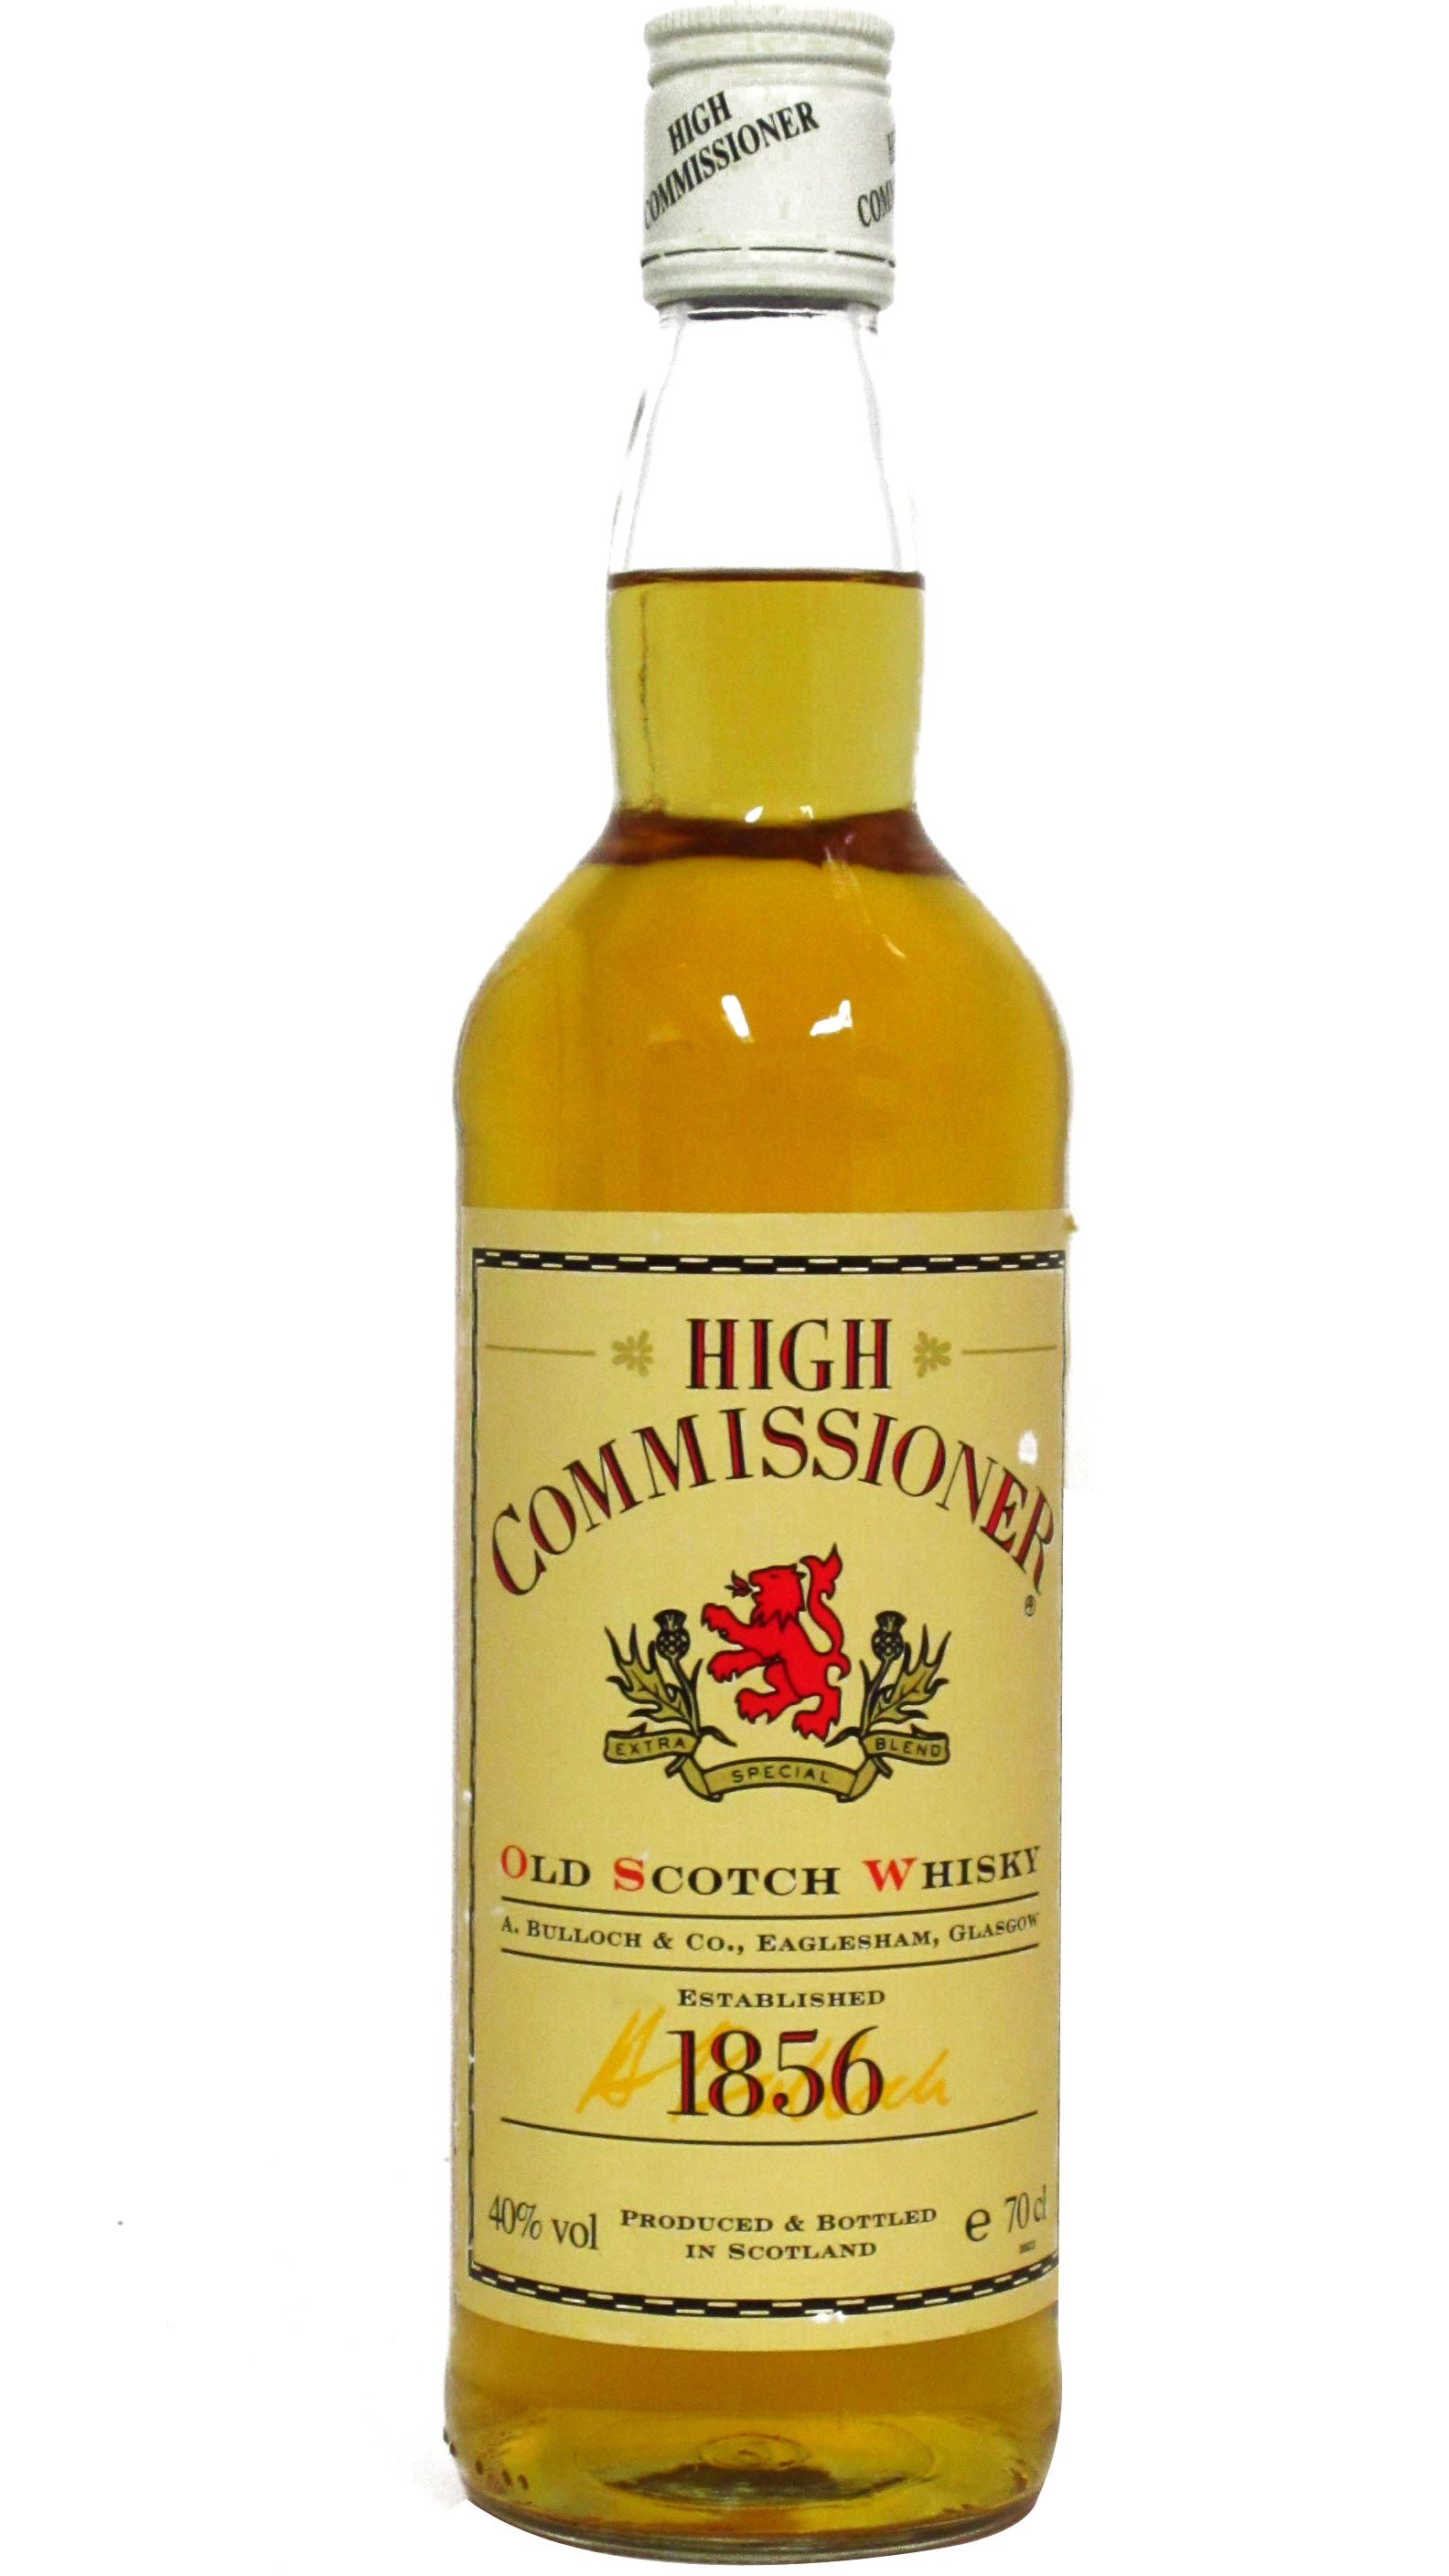 Виски хай коммишинер. Виски Commissioner 1856. High Commissioner виски. Commissioner Blended Scotch Whisky.